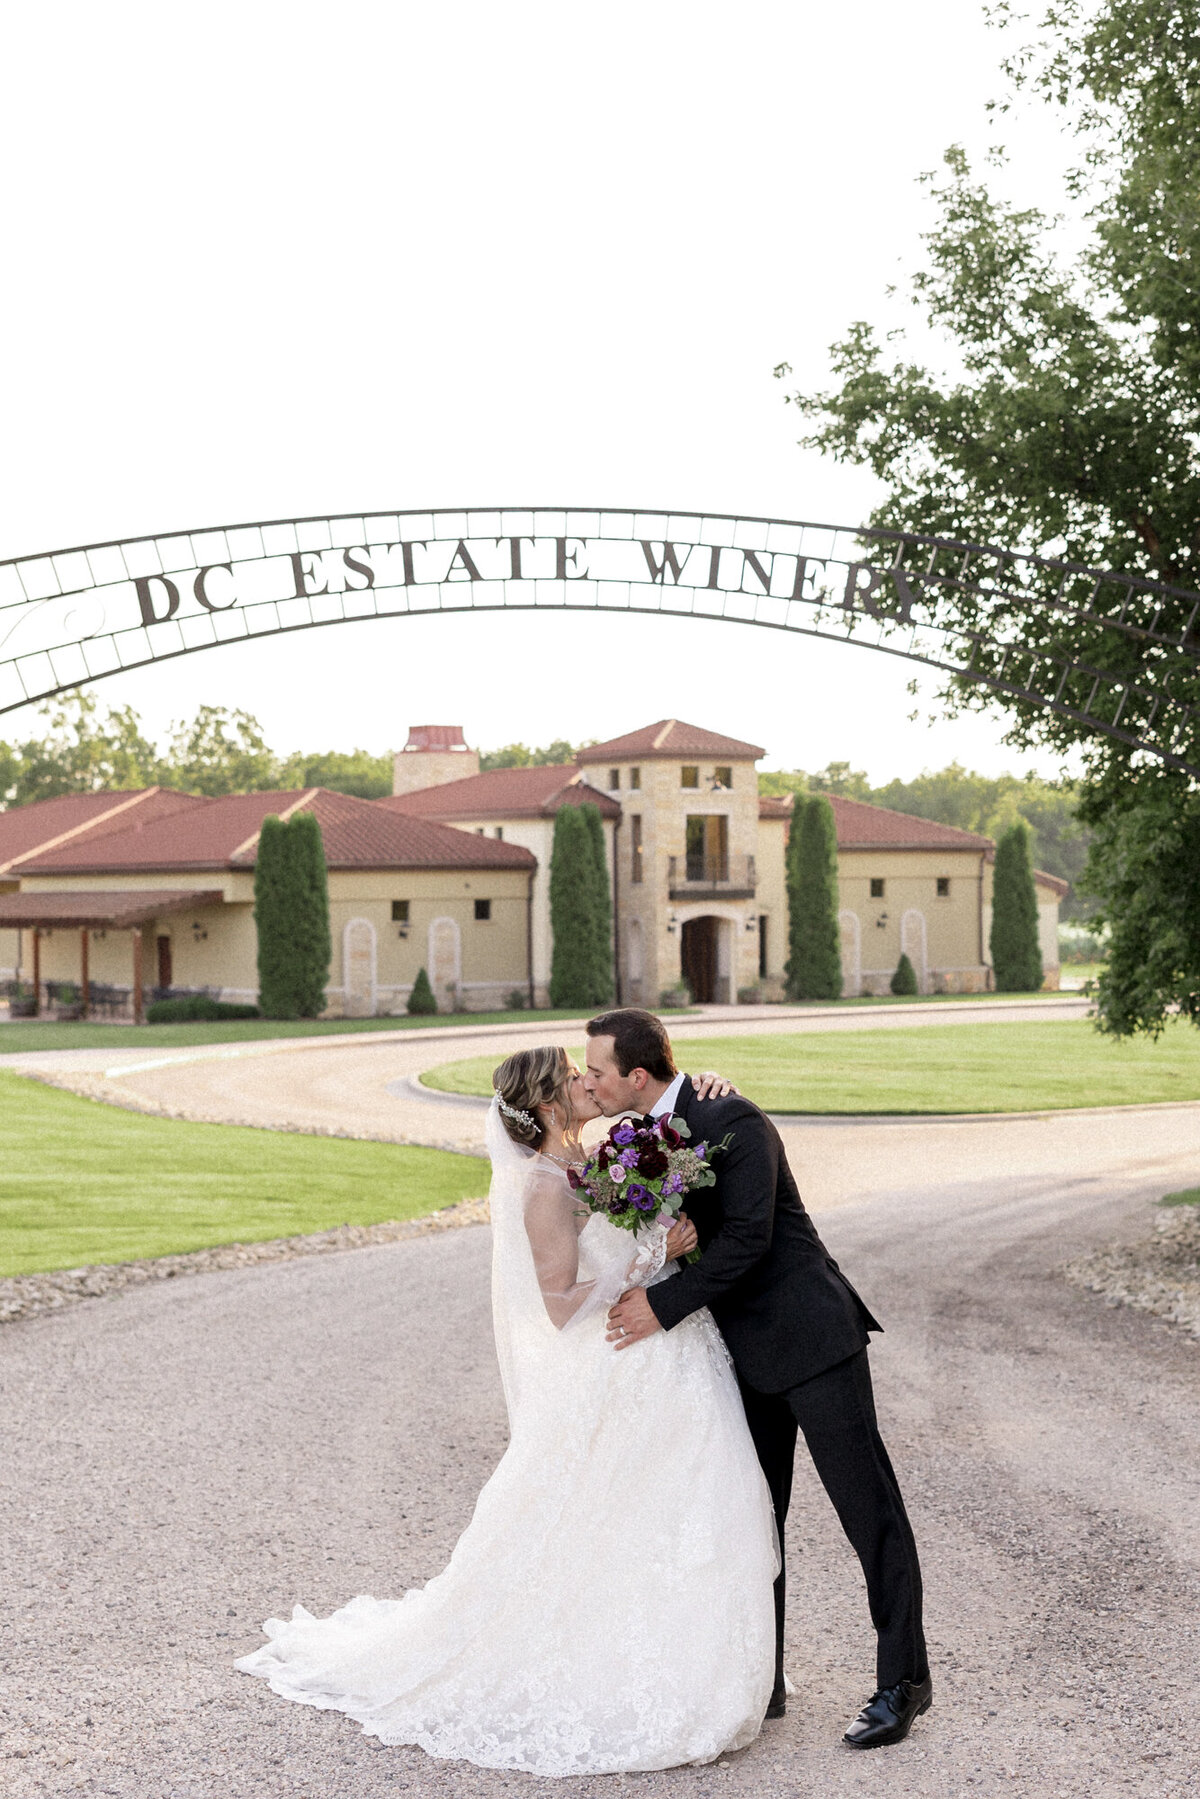 Summer-Wedding-DC-Estate-Winery-Beloit-Illinois-Meg-Dunn-Photography-64